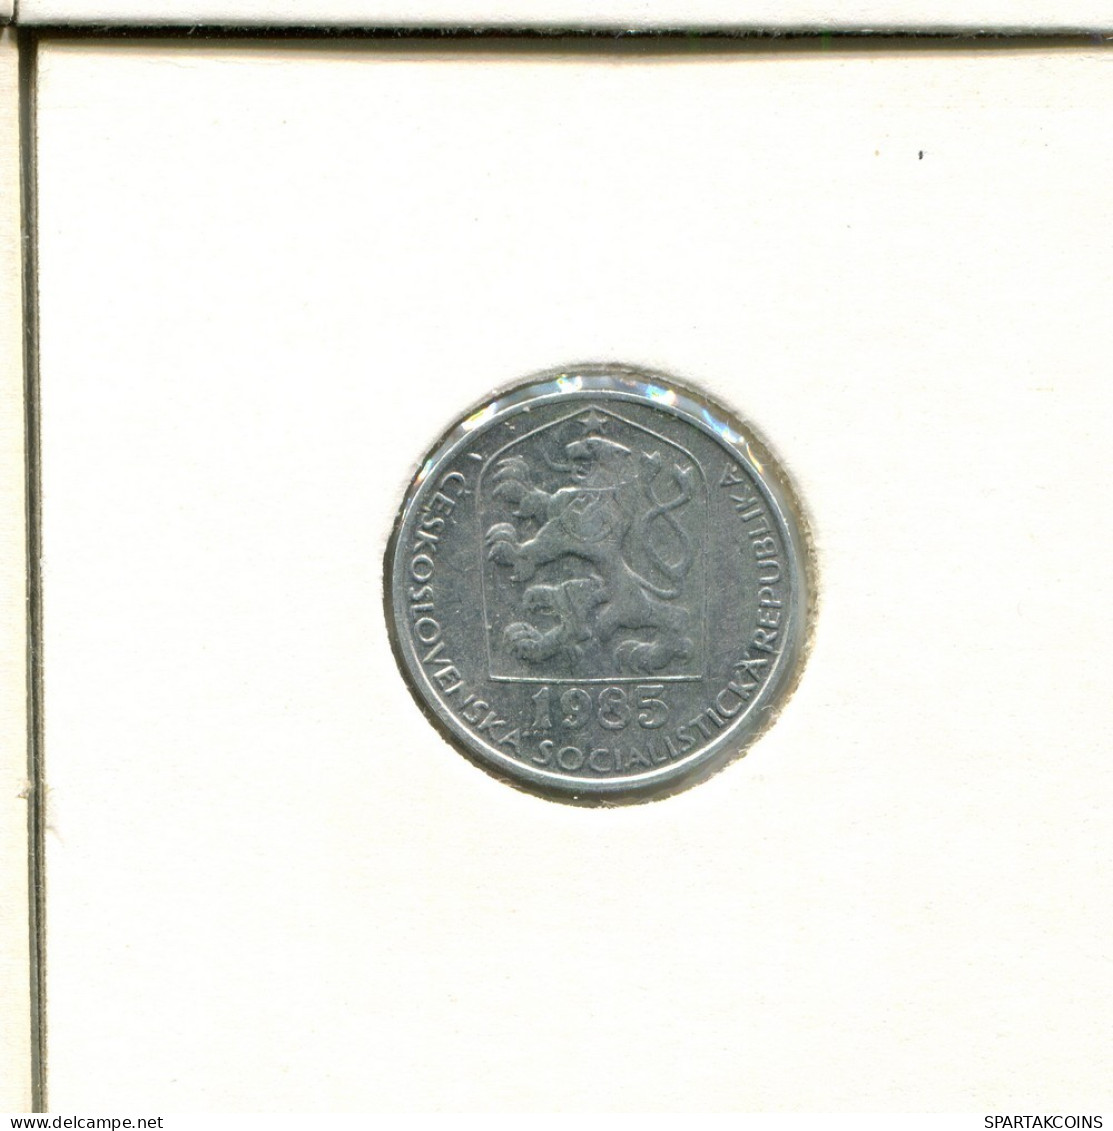 10 HALERU 1985 CZECHOSLOVAKIA Coin #AS941.U.A - Tschechoslowakei